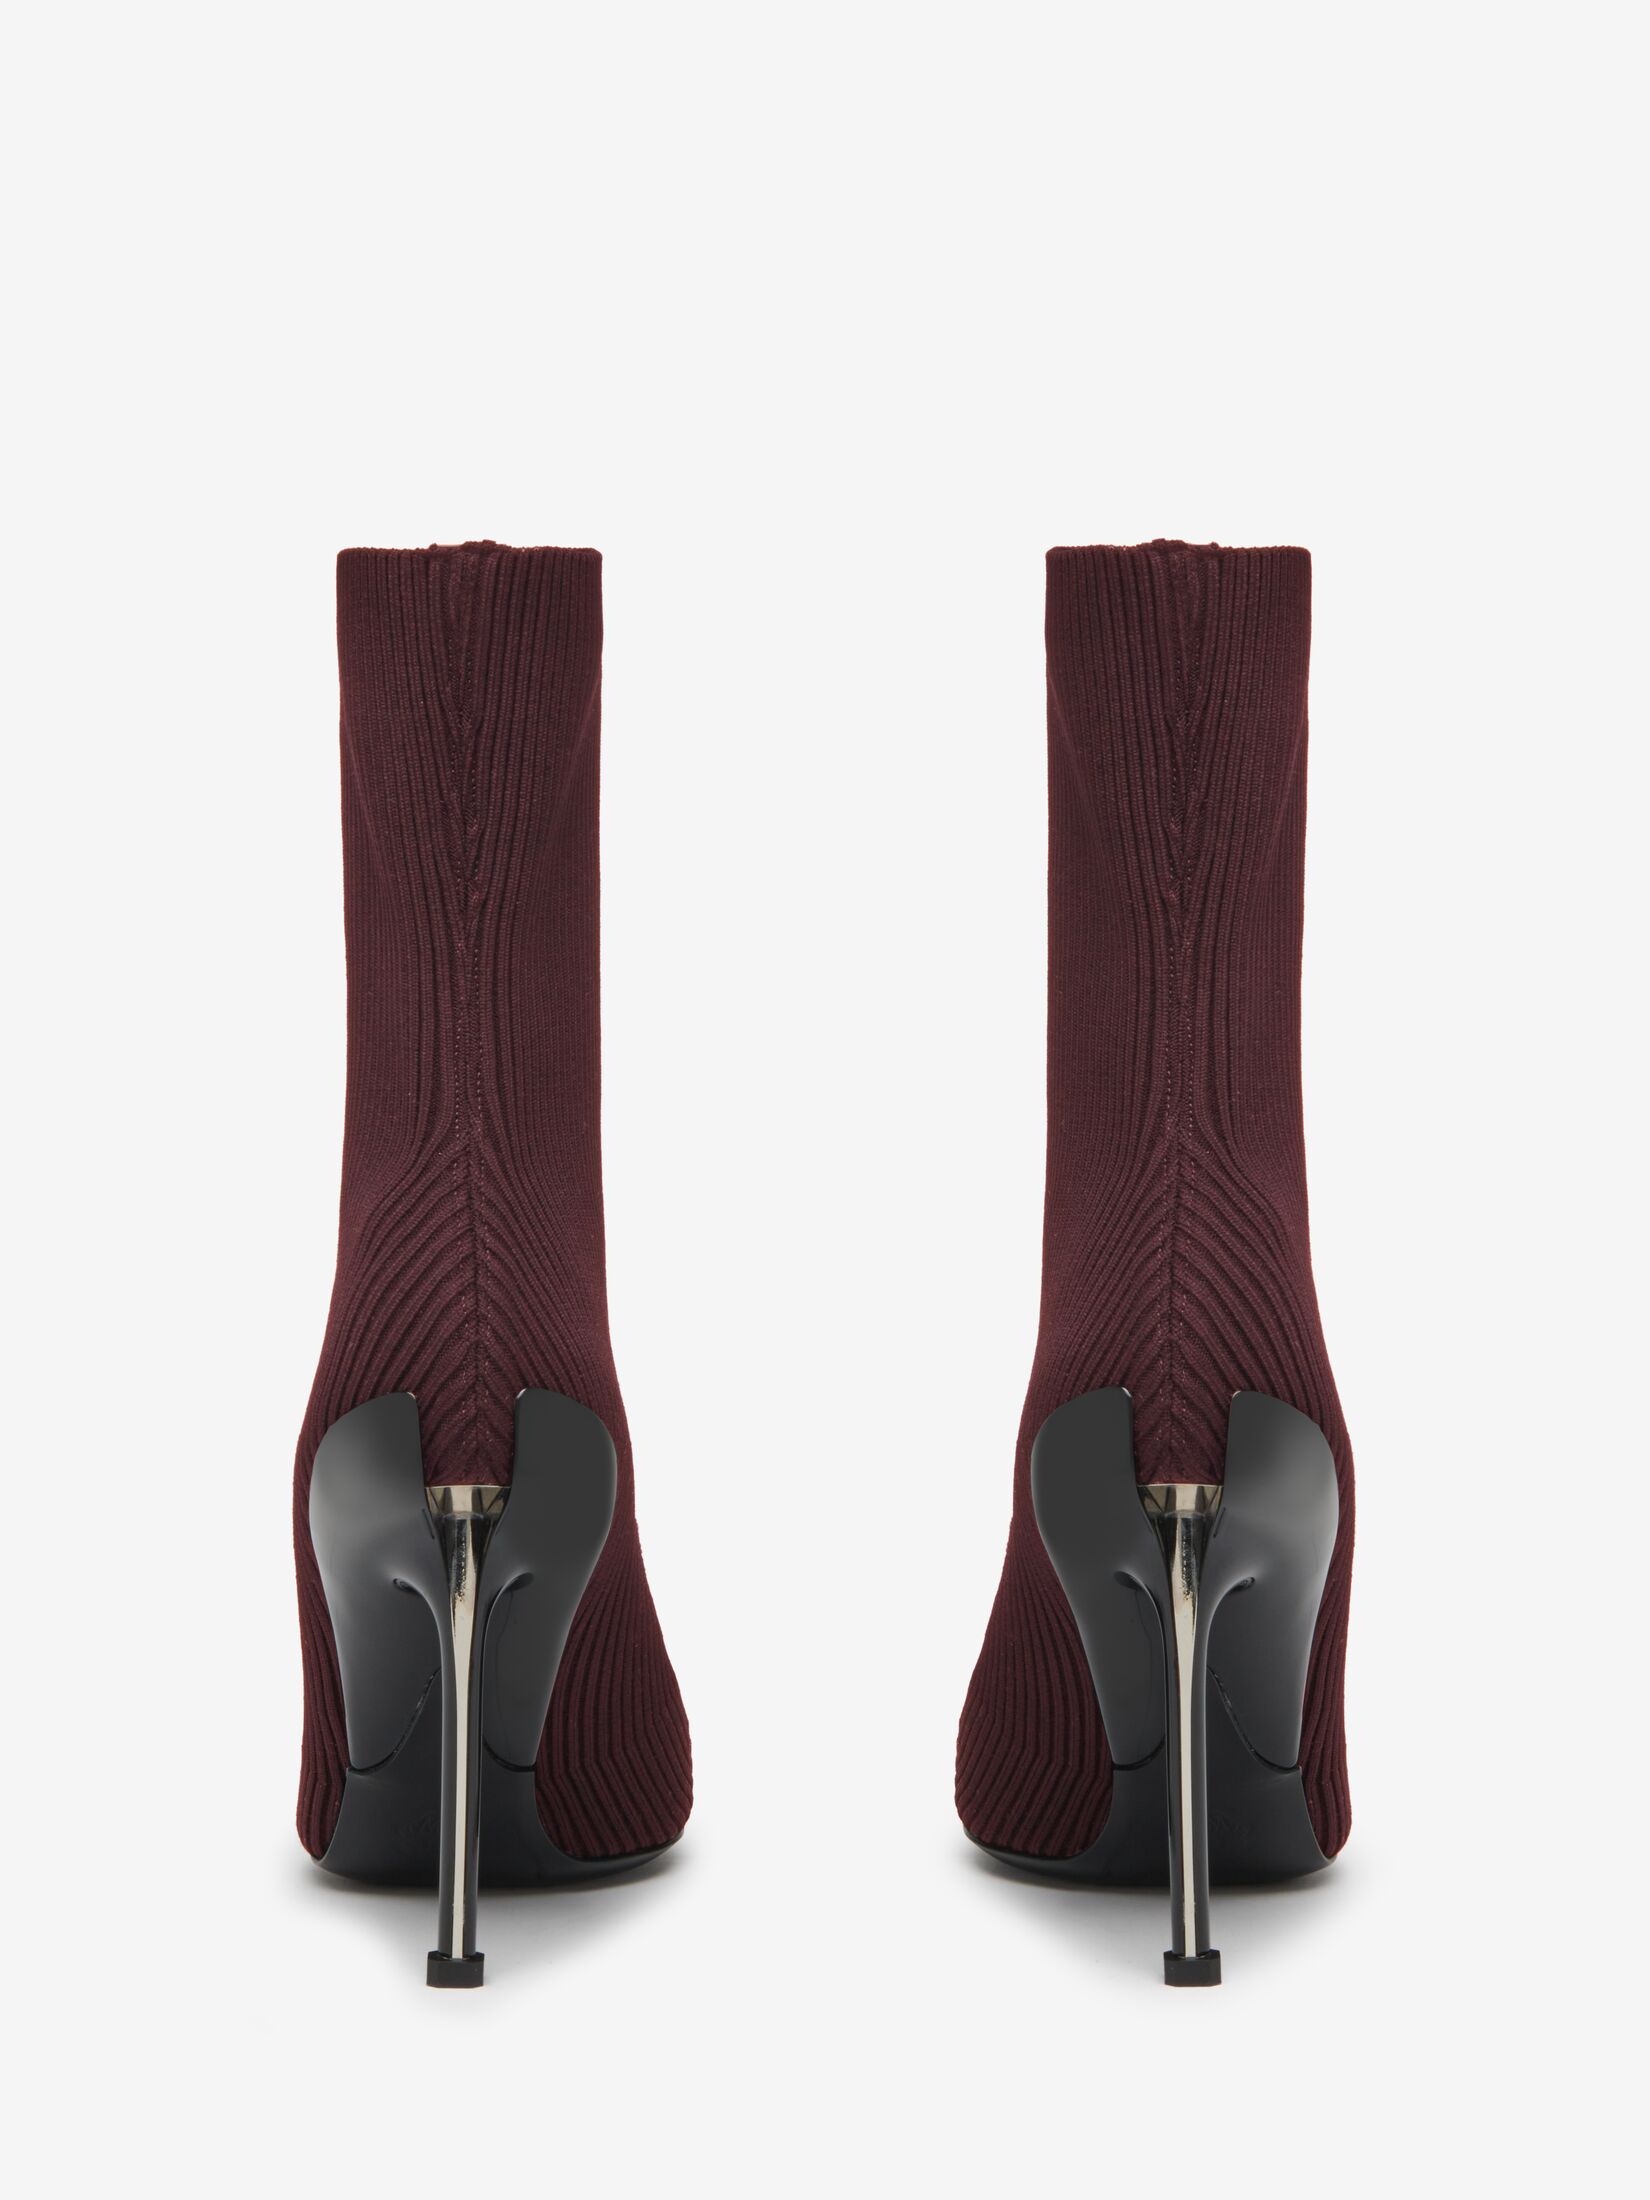 Slash Knit Boot in Black/Silver | Alexander McQueen US